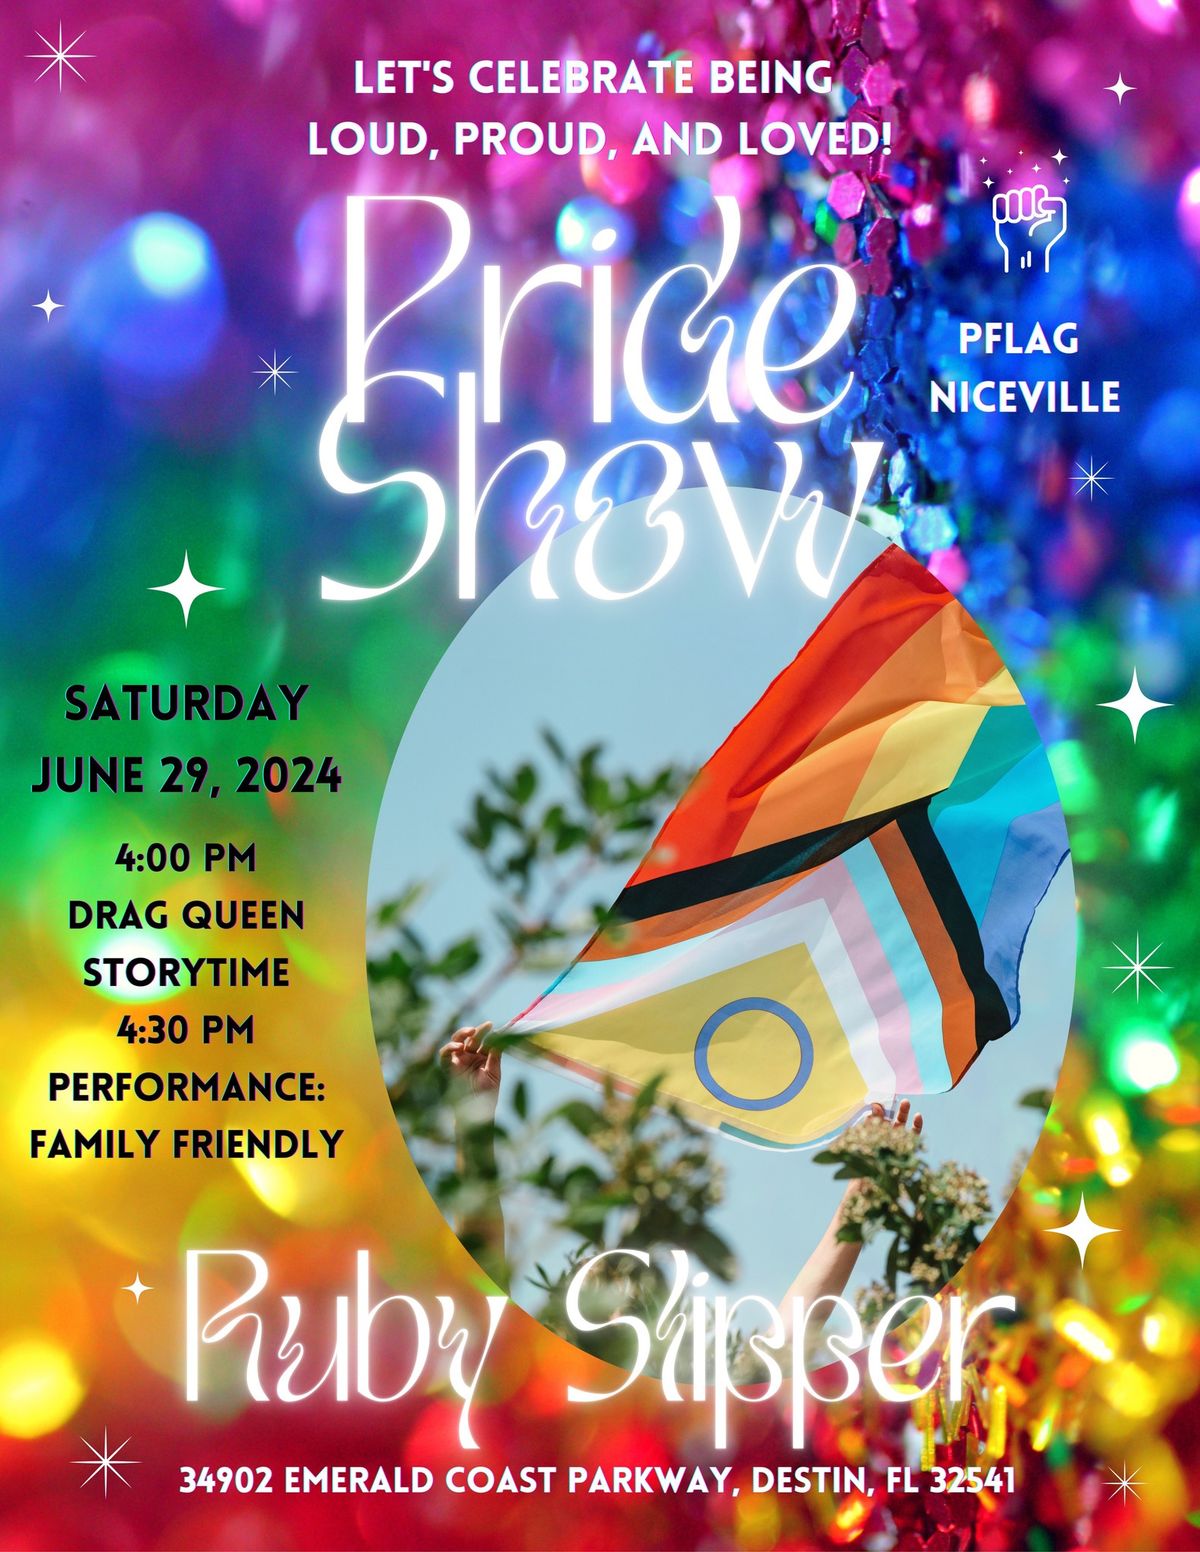 PFLAG Niceville's Pride Show